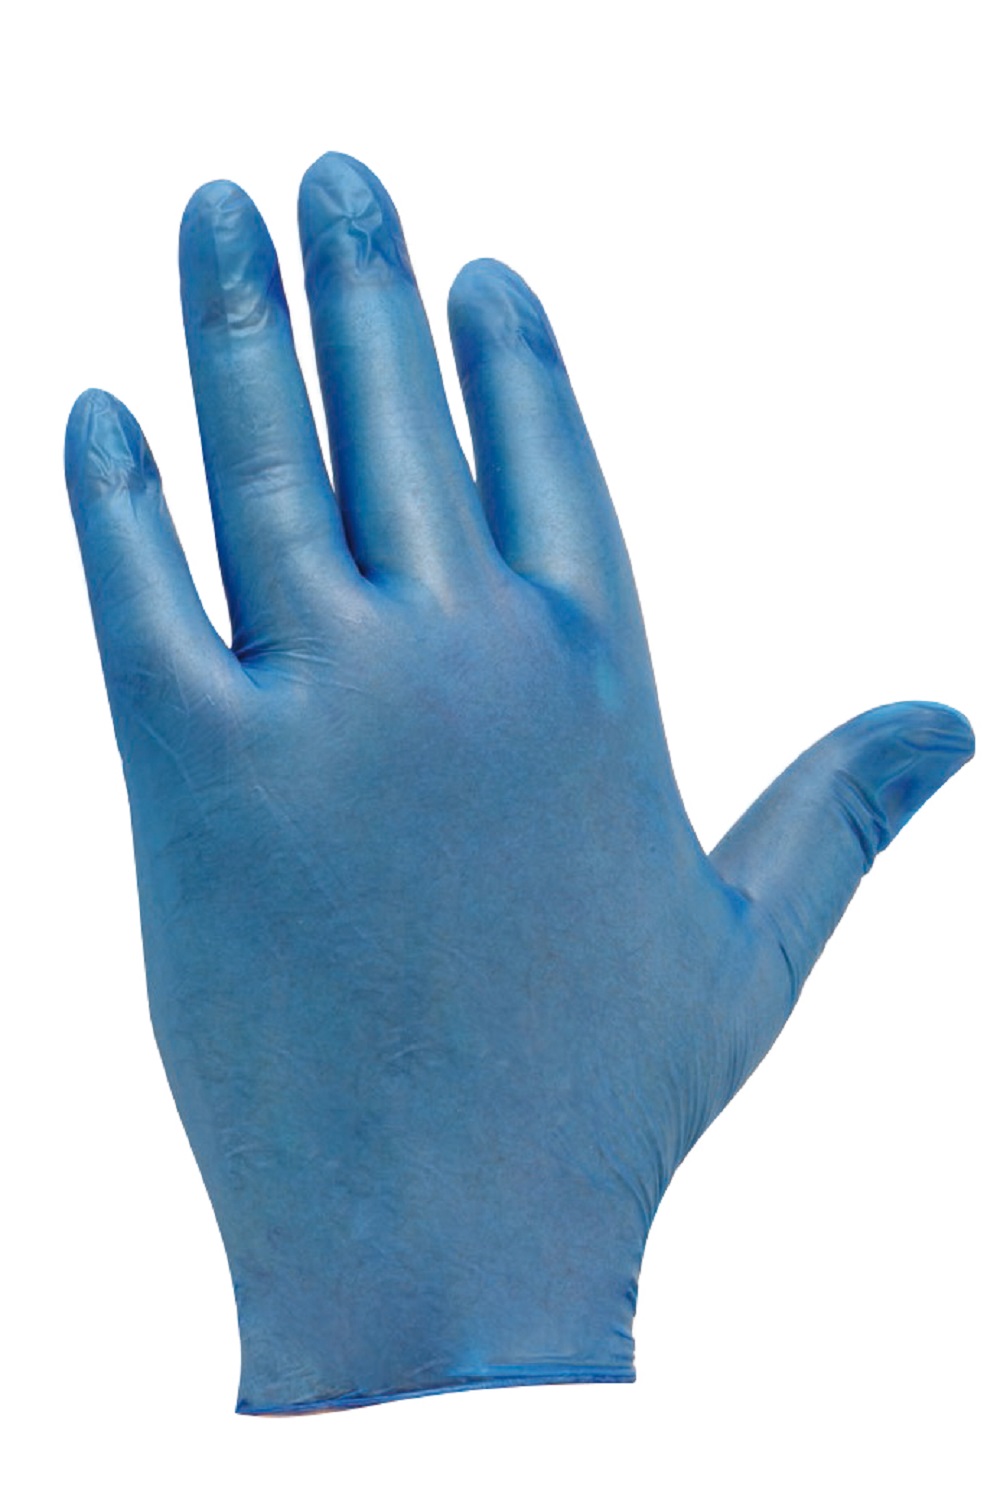 Small Medium Large Blue Disposable Nitrile Glove 3/3.5/4 Mil 100/Box Powder Free 